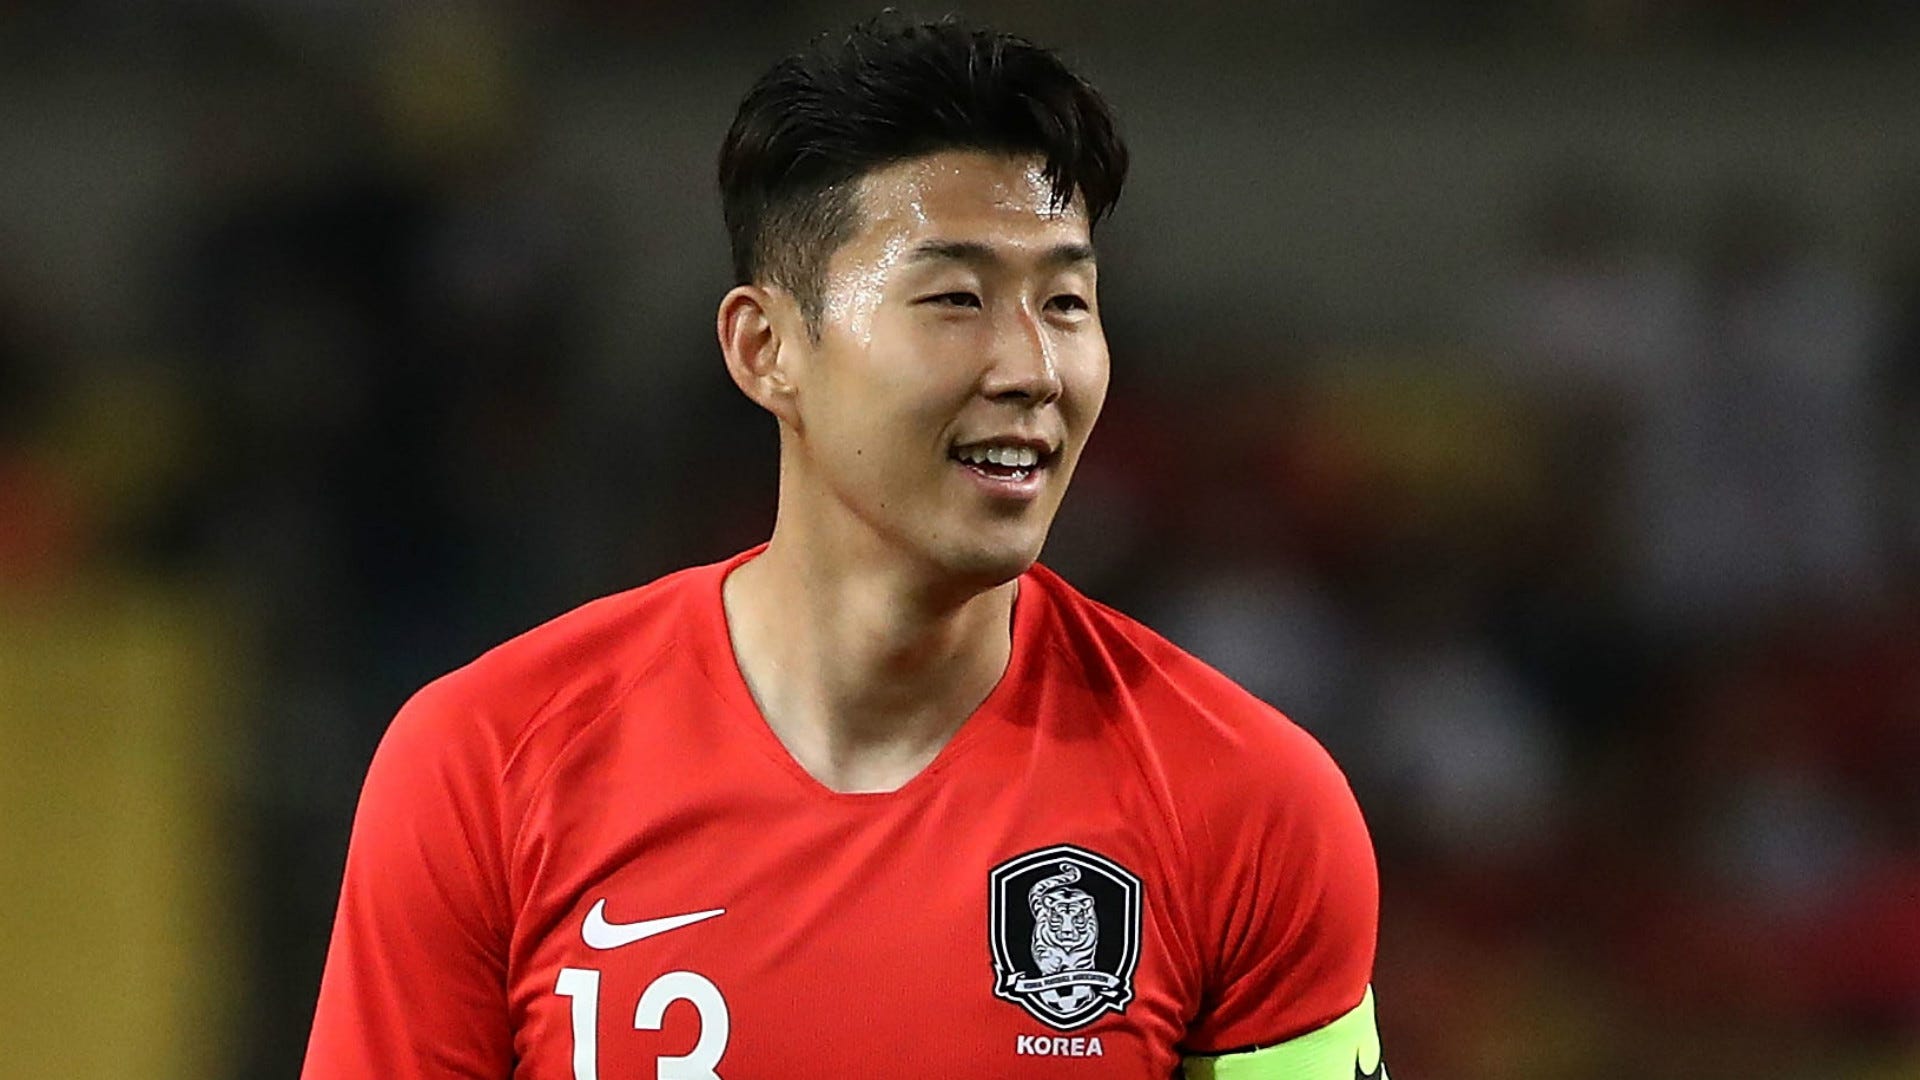 South Korea's top goal scorers' jerseys